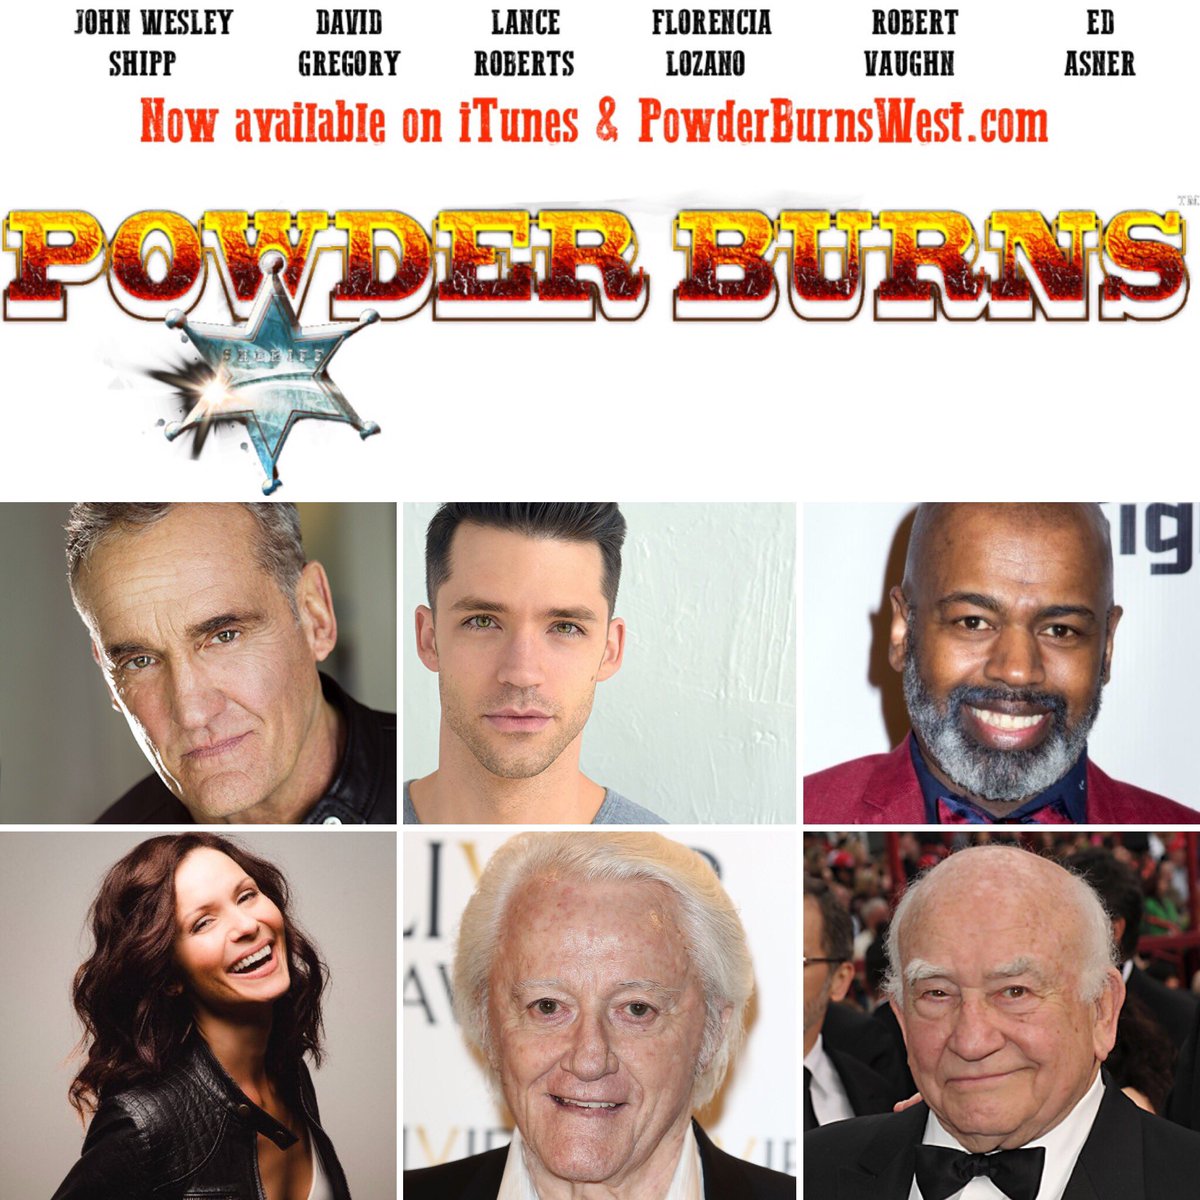 On #NationalCowboyDay check out Western Audio Drama @PowderBurnsWest Starring @JohnWesleyShipp with @LanceOnTheLoose @ilovelorca, @JeffreyCHawkins, the late #RobertVaughn & @TheOnlyEdAsner Created, Written & Starring @davidagreg PowderBurnsWest.com🎙️#podcast